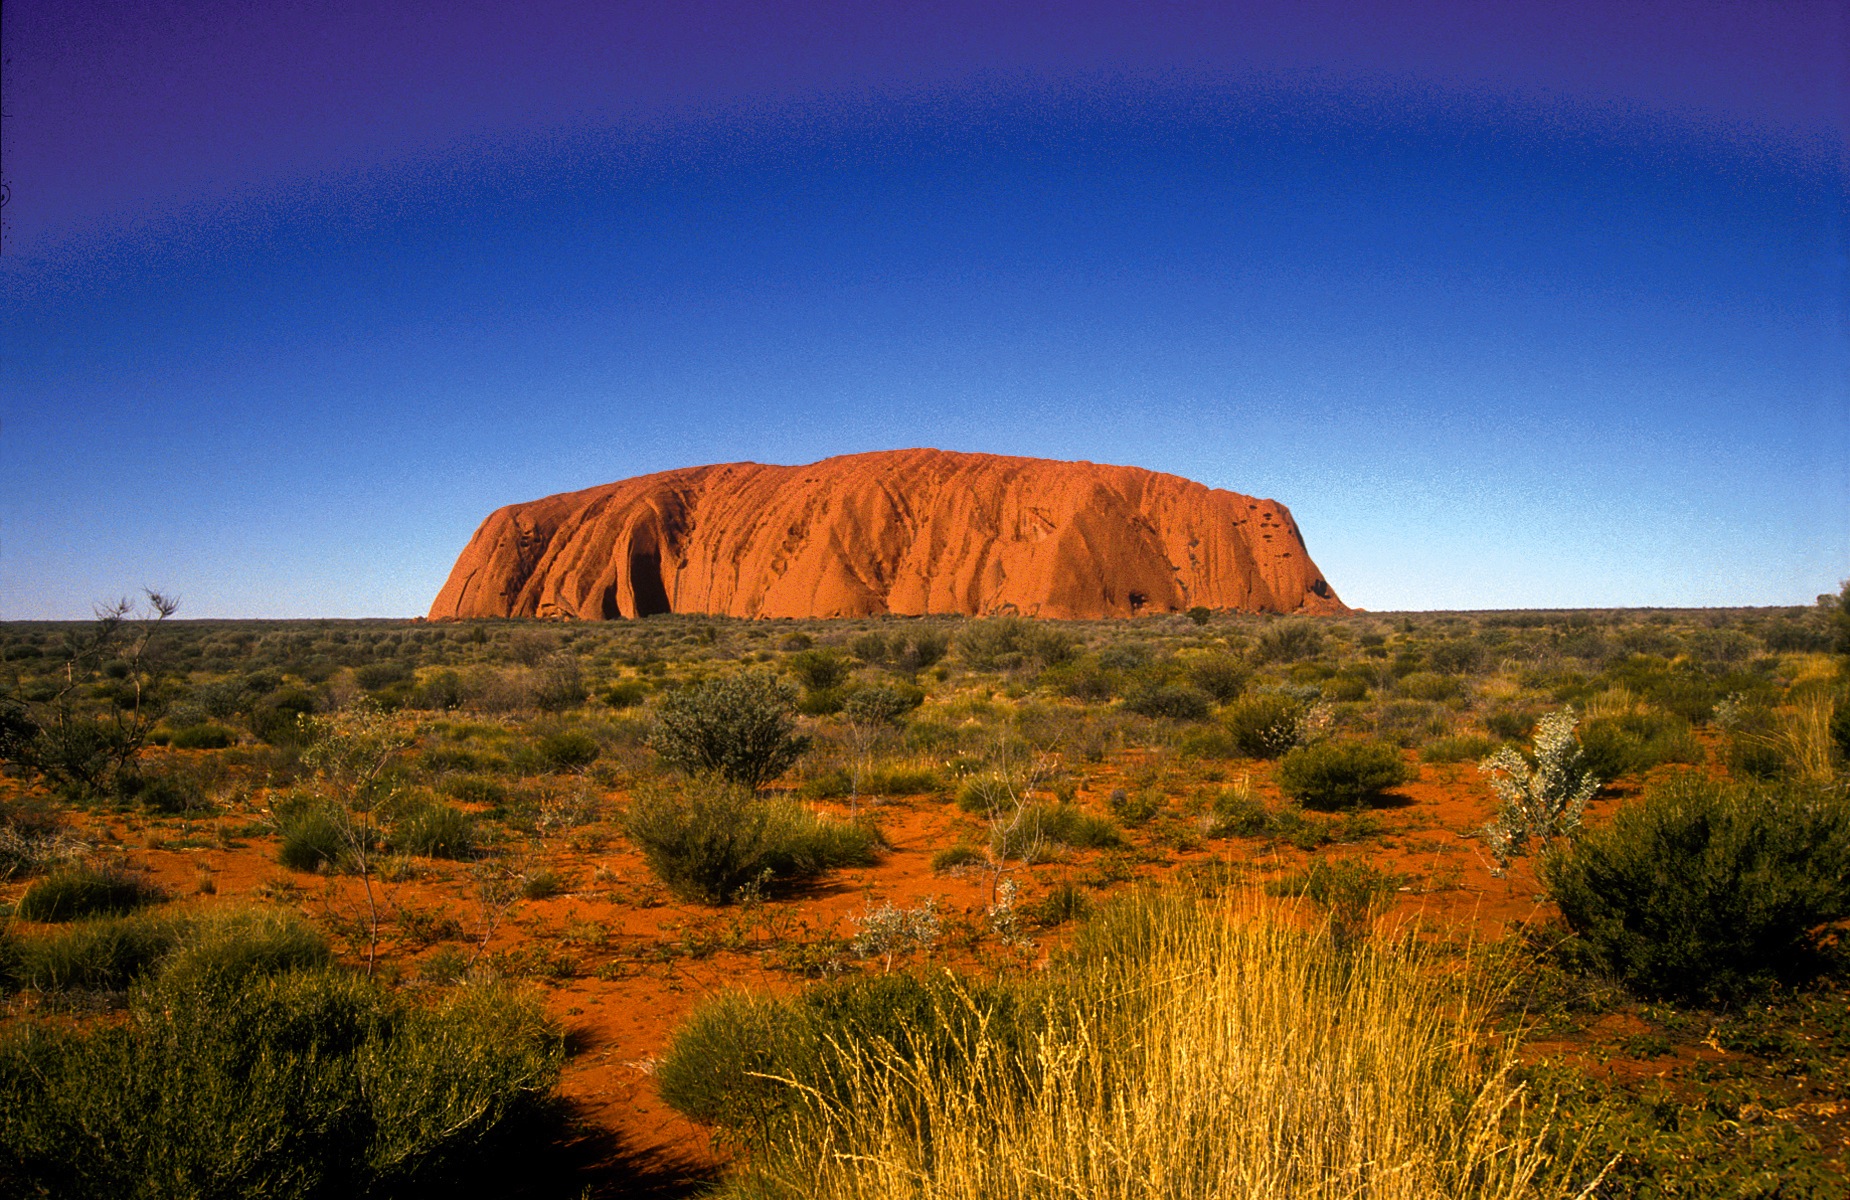 Ayers Rock/Uluru in central Australian desert, Northern Territory. 1992.